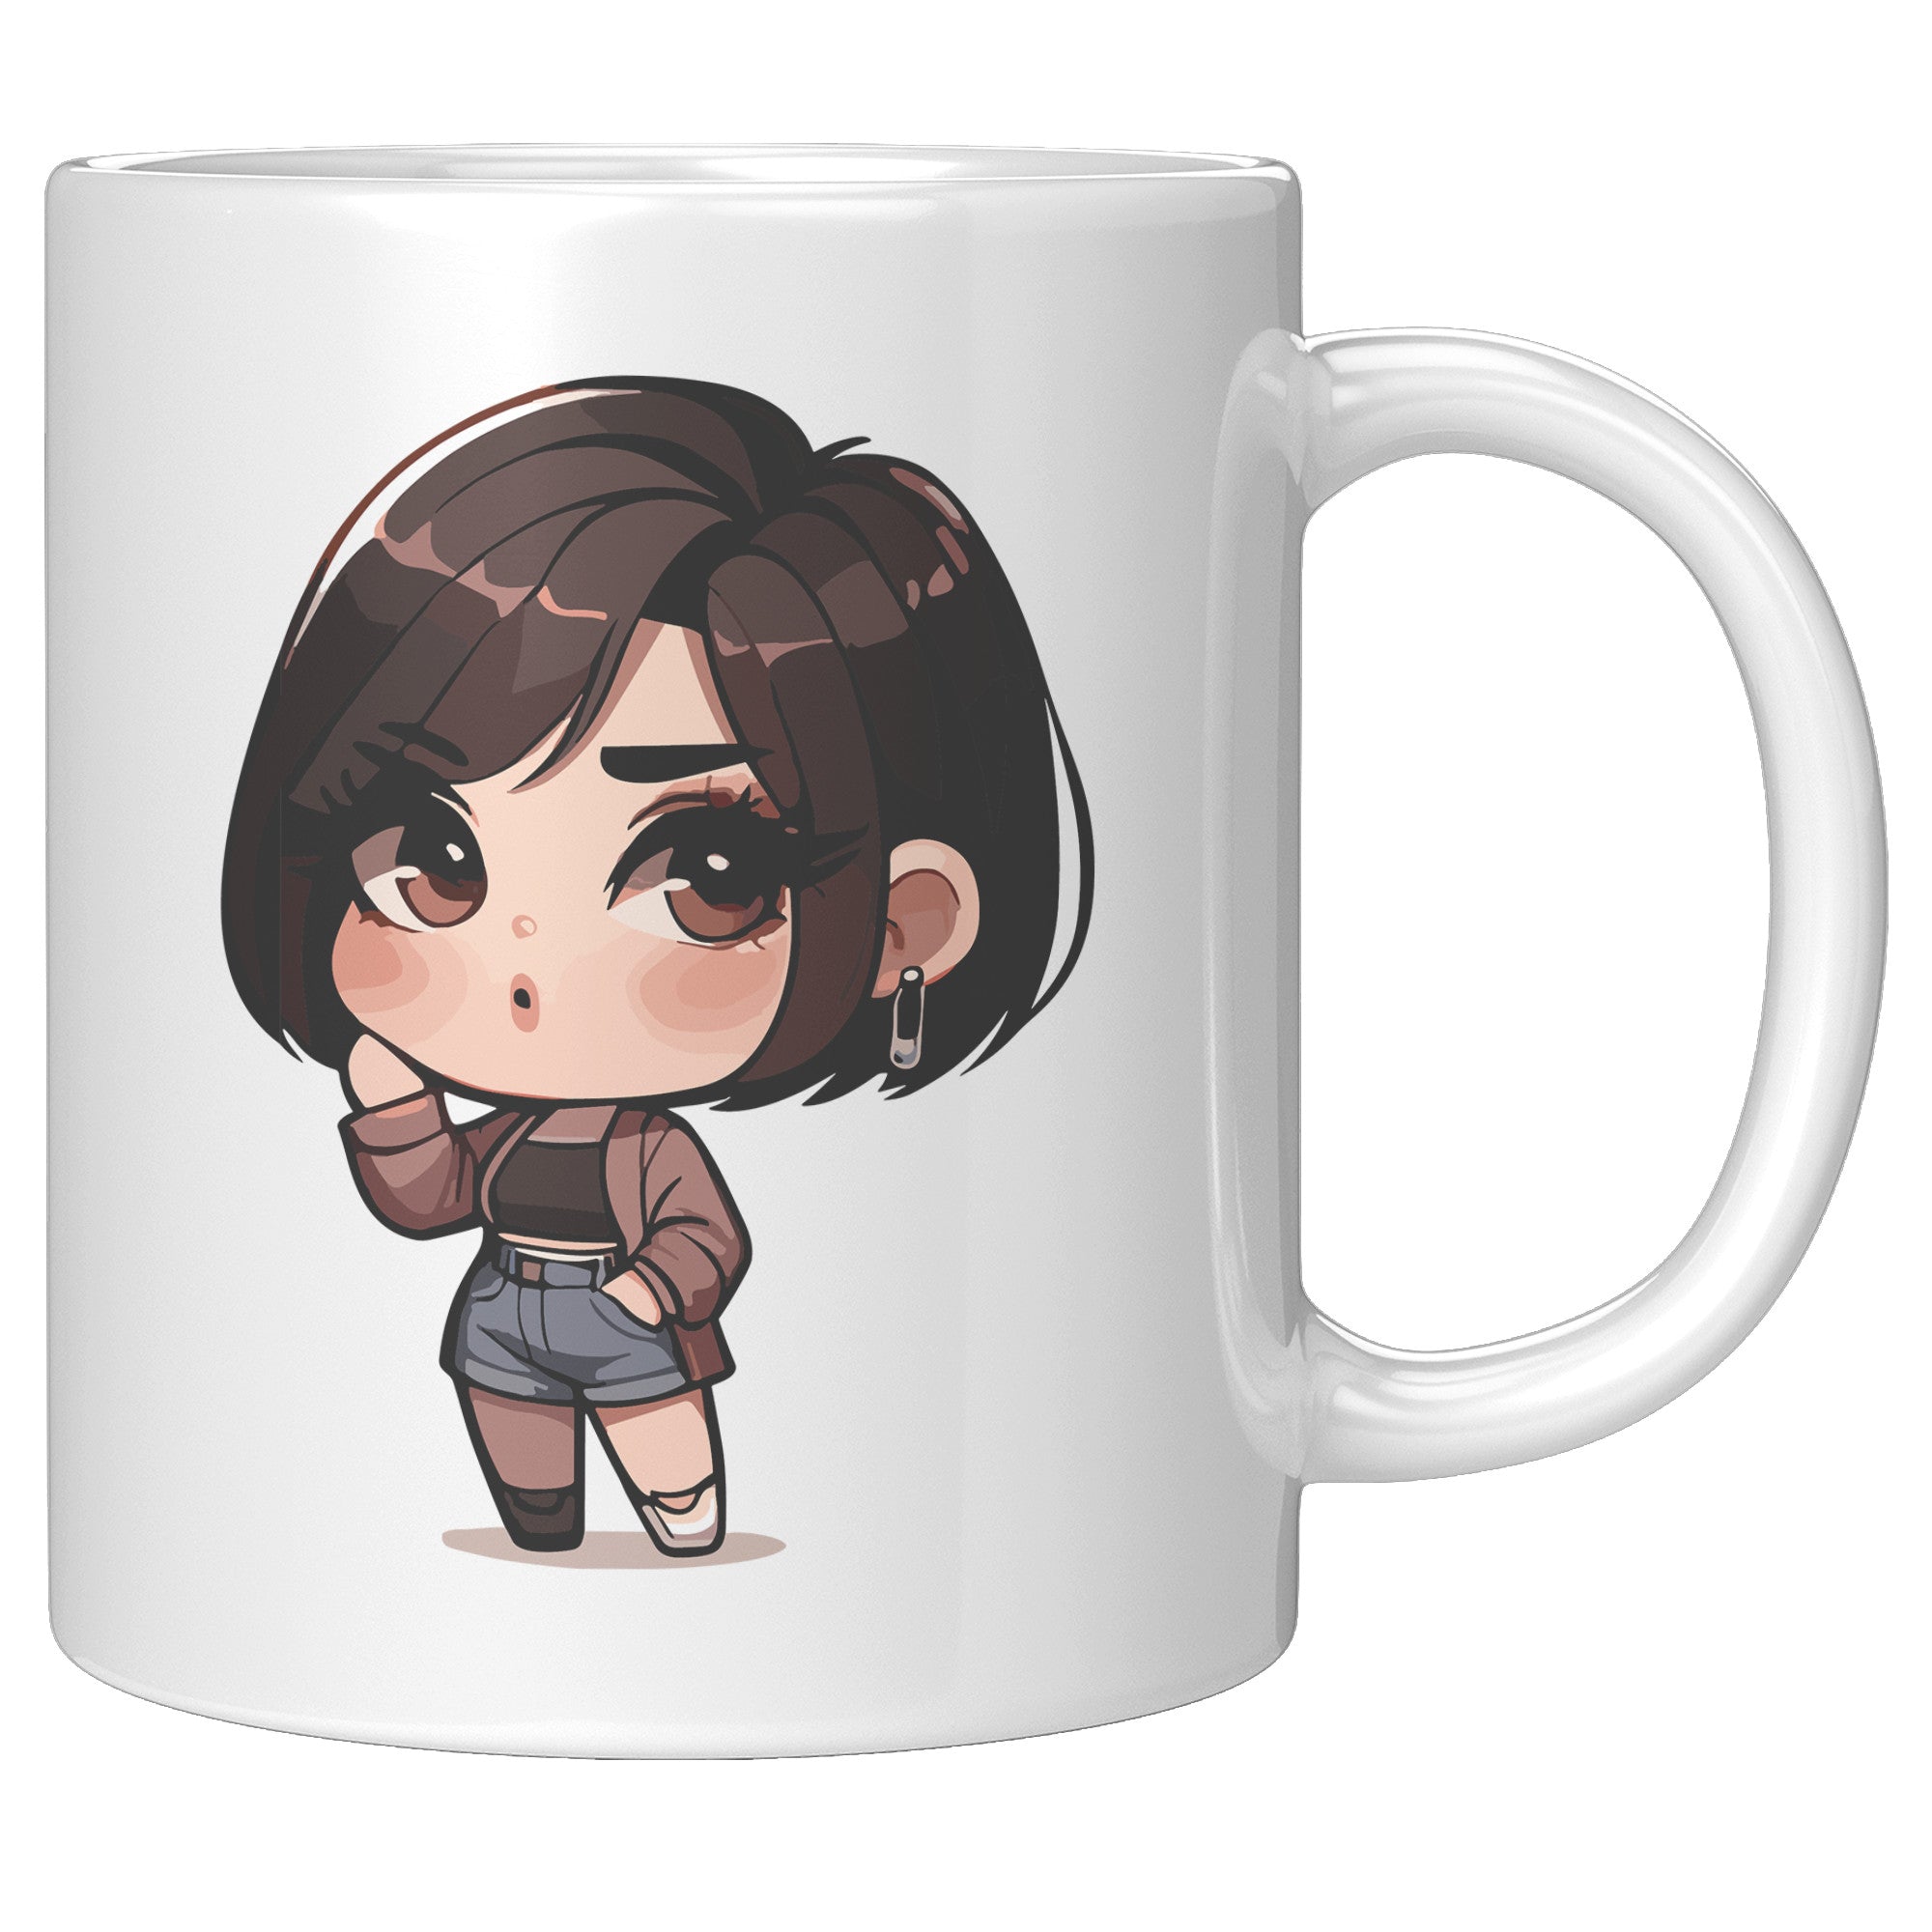 "Marites Gossip Queen Coffee Mug - Cute Cartoon 'Ano Ang Latest?' Cup - Perfect Chismosa Gift - Filipino Slang Tea Mug" - RRR